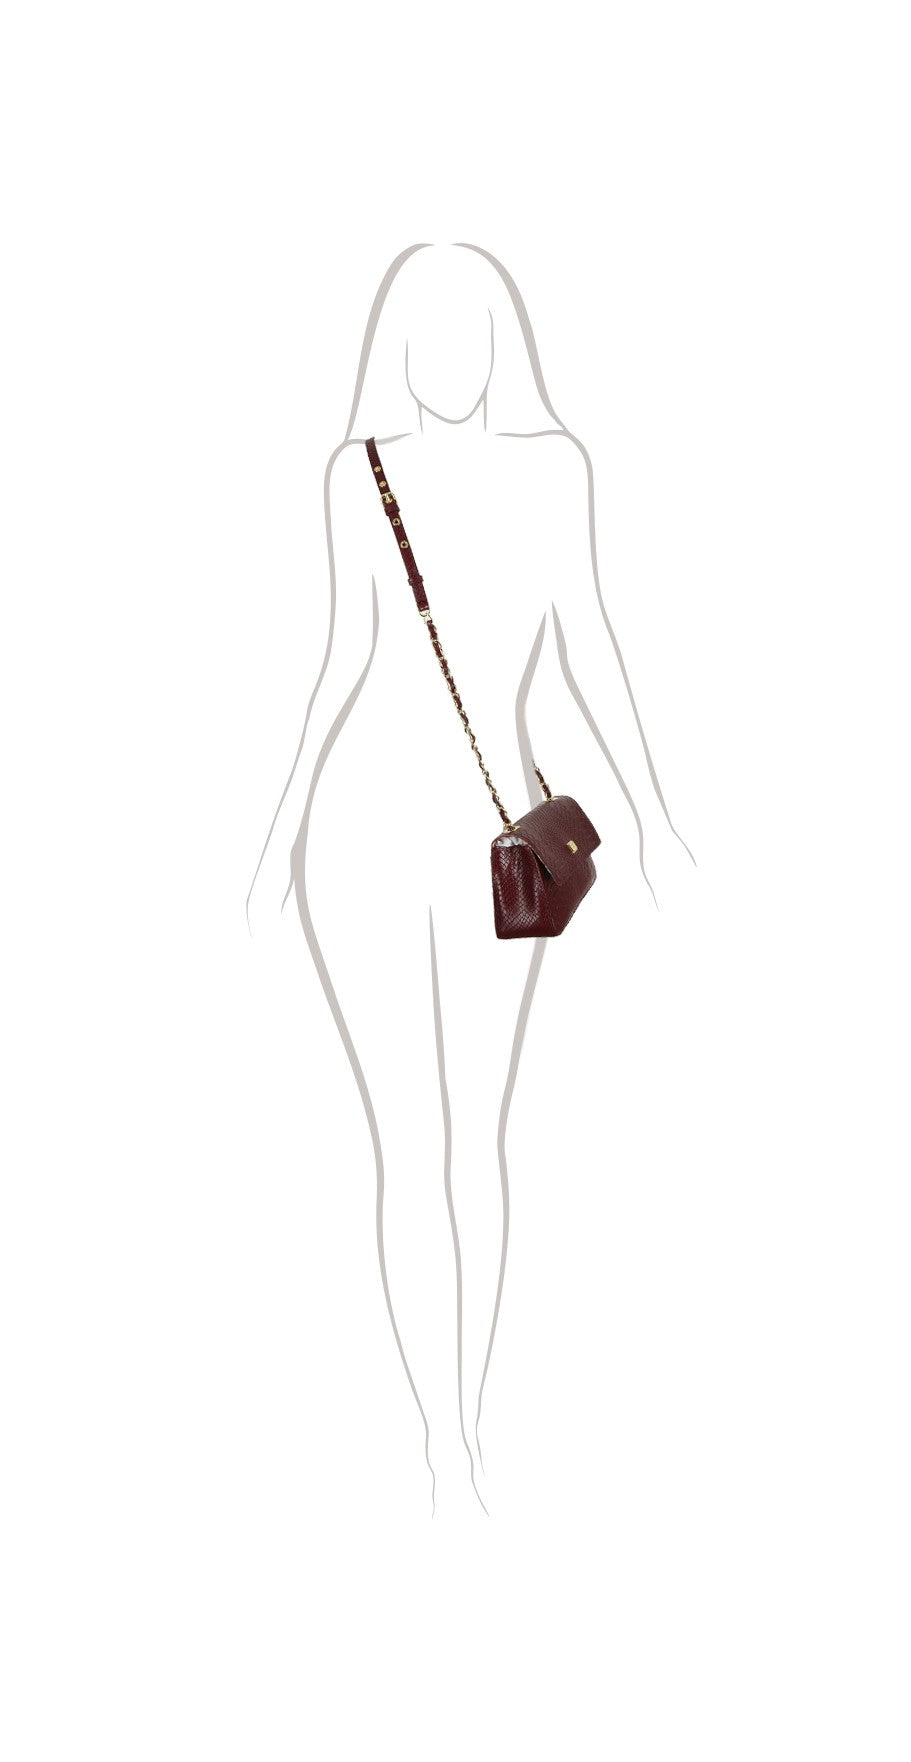 BUFFY CLARET women's leather handbag